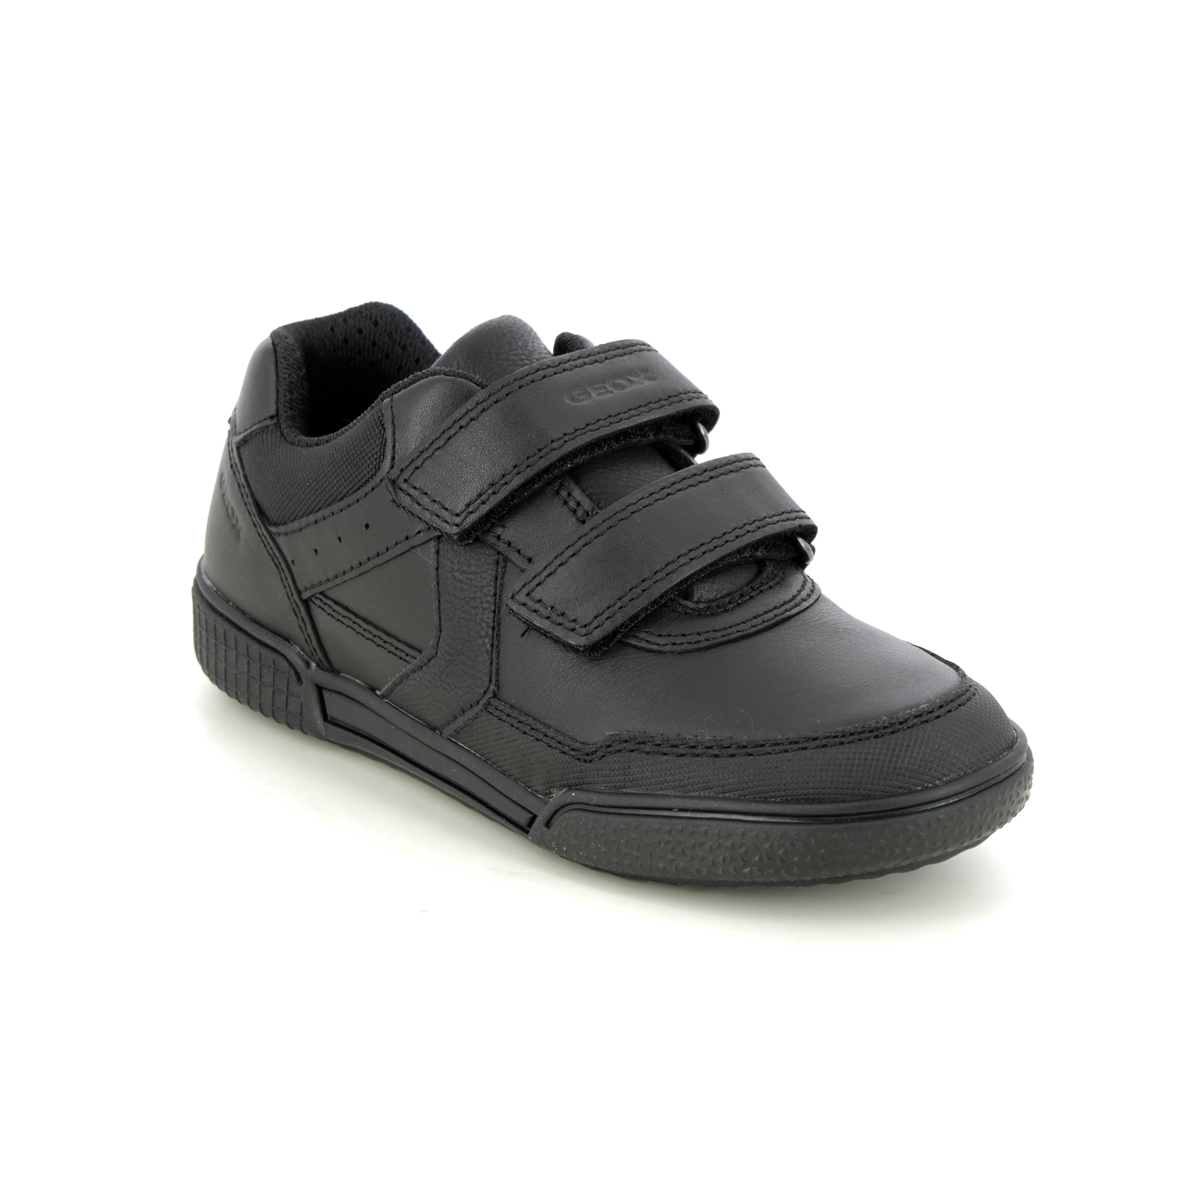 Geox - Poseido Boy 2V (Black Leather) J02Bca-C9999 In Size 29 In Plain Black Leather For School For kids